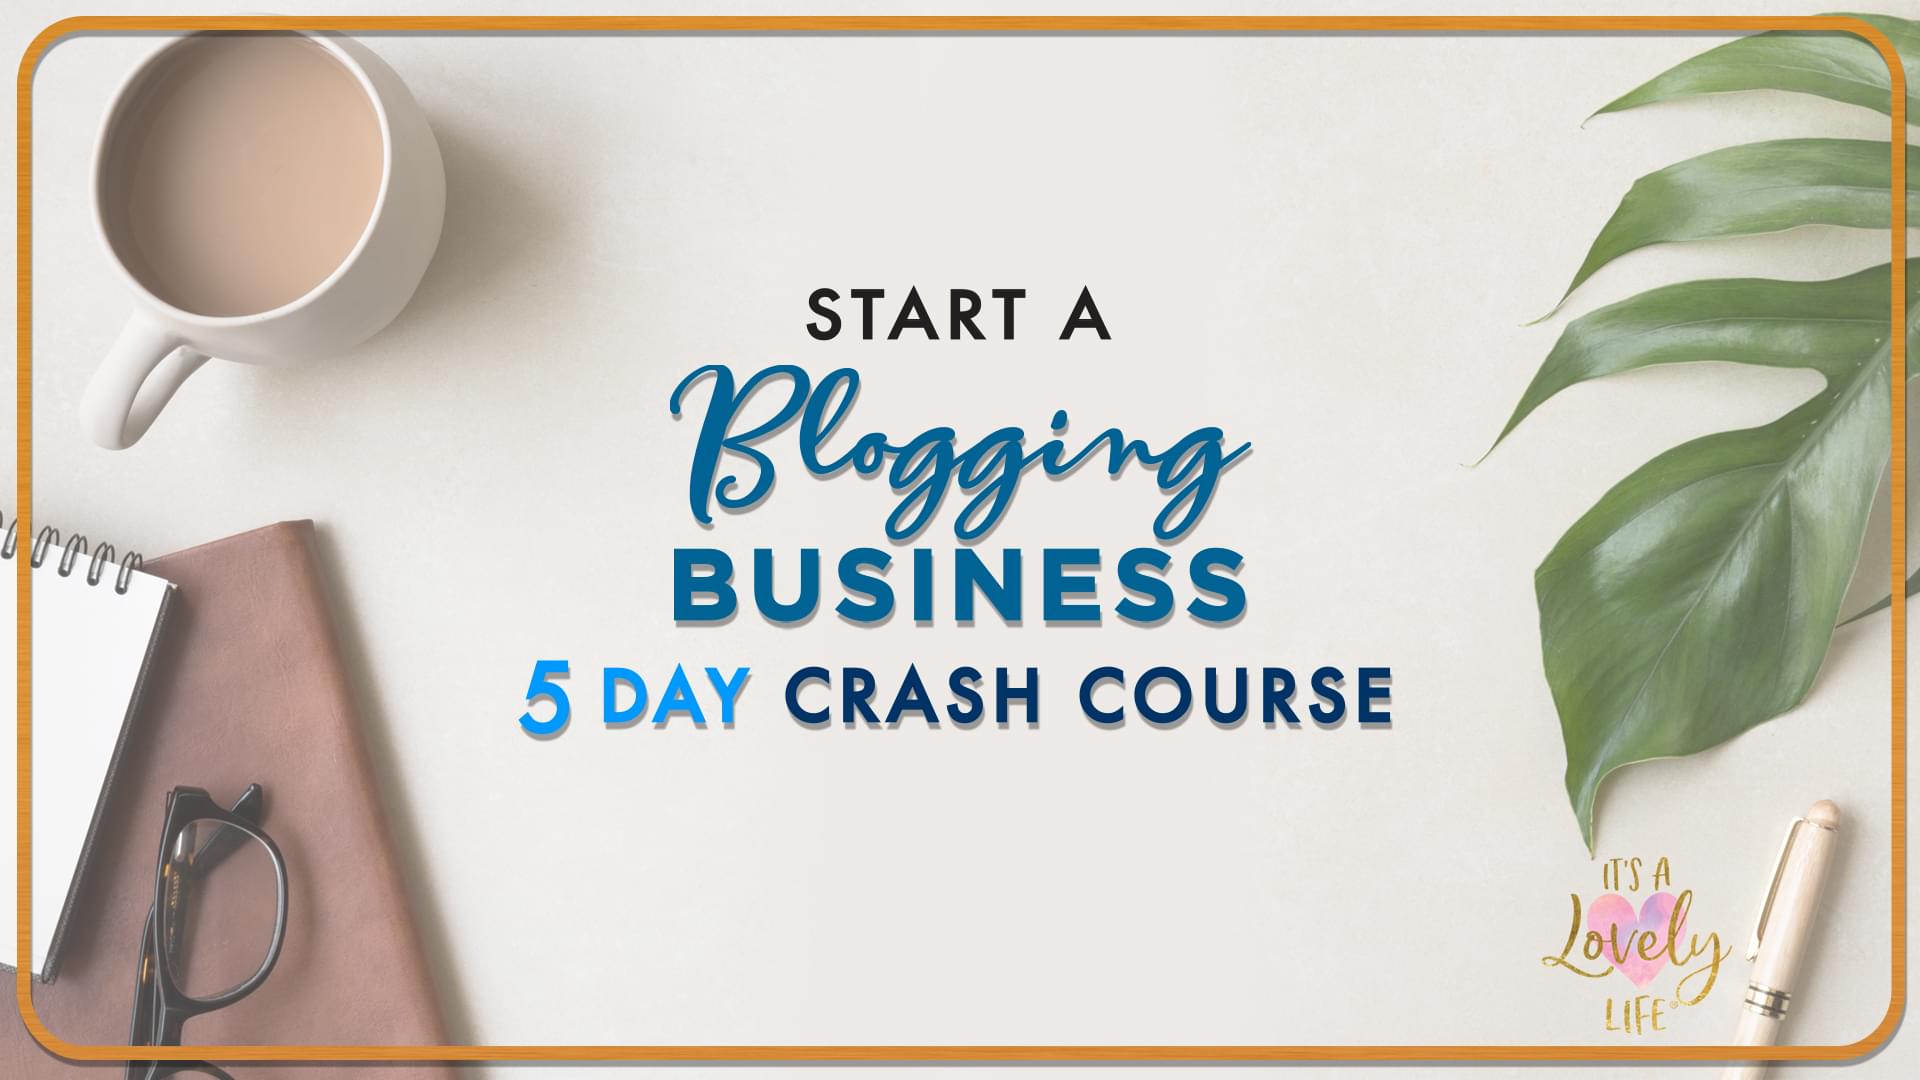 Start a Blogging Business 5 Day Crash Course